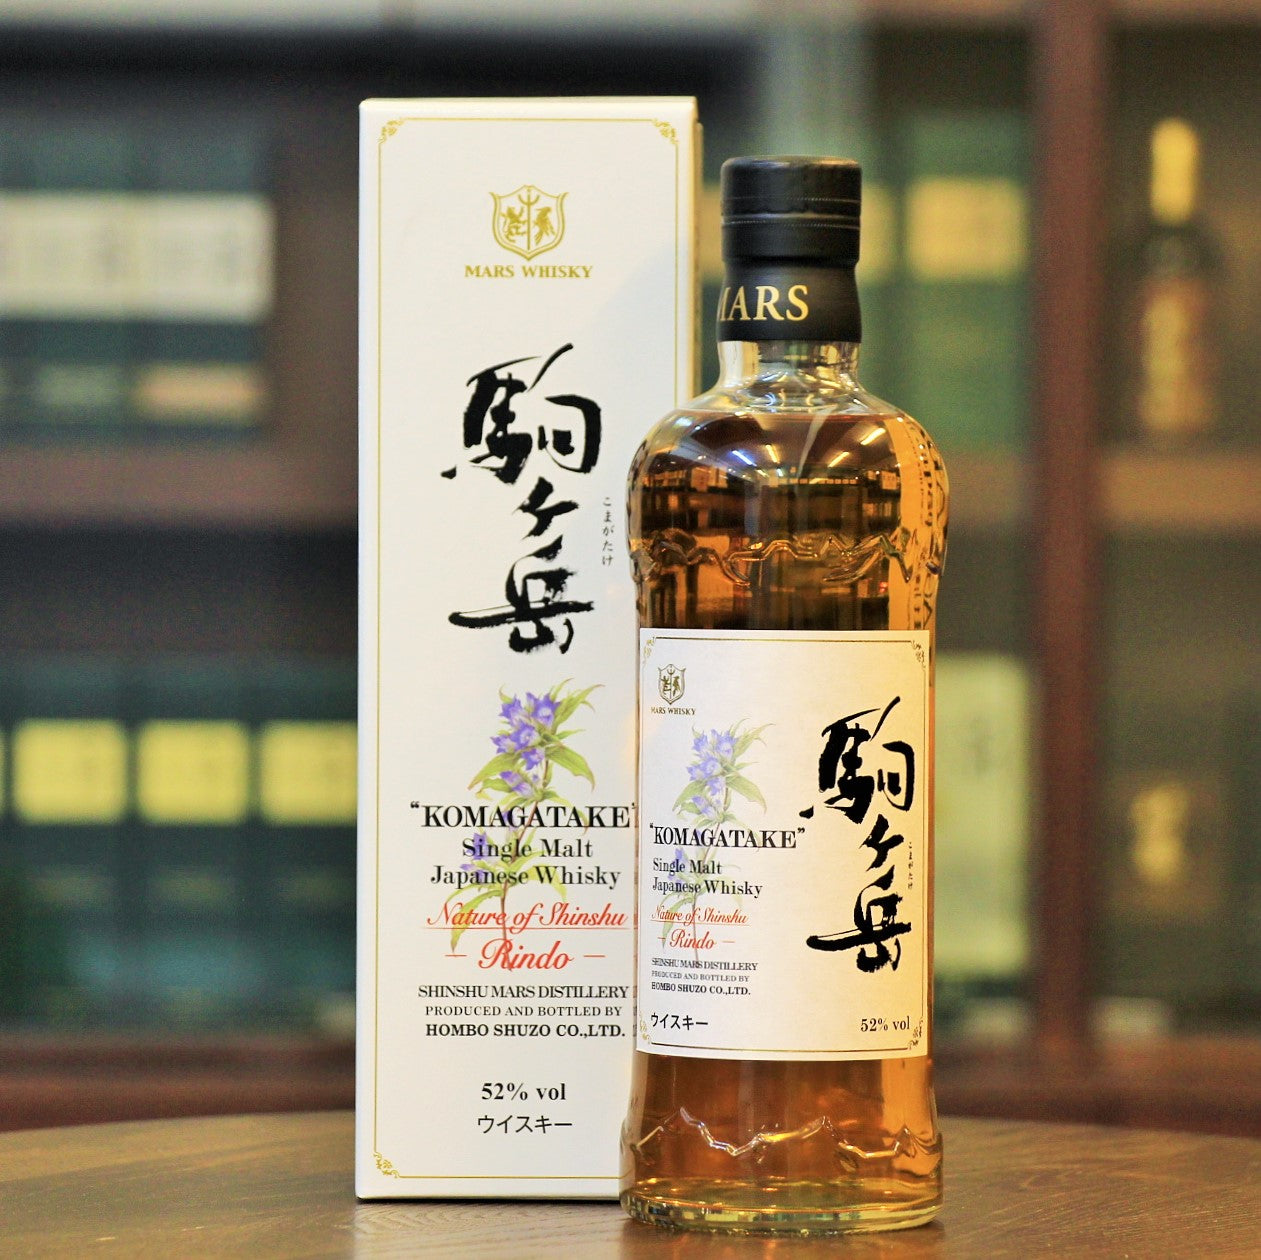 A limited and collectible Single Malt Japanese Whisky Komagatake from Shinshu Mars available on HK Liquor & Spirits Shop Mizunara Wong Chuk Hang